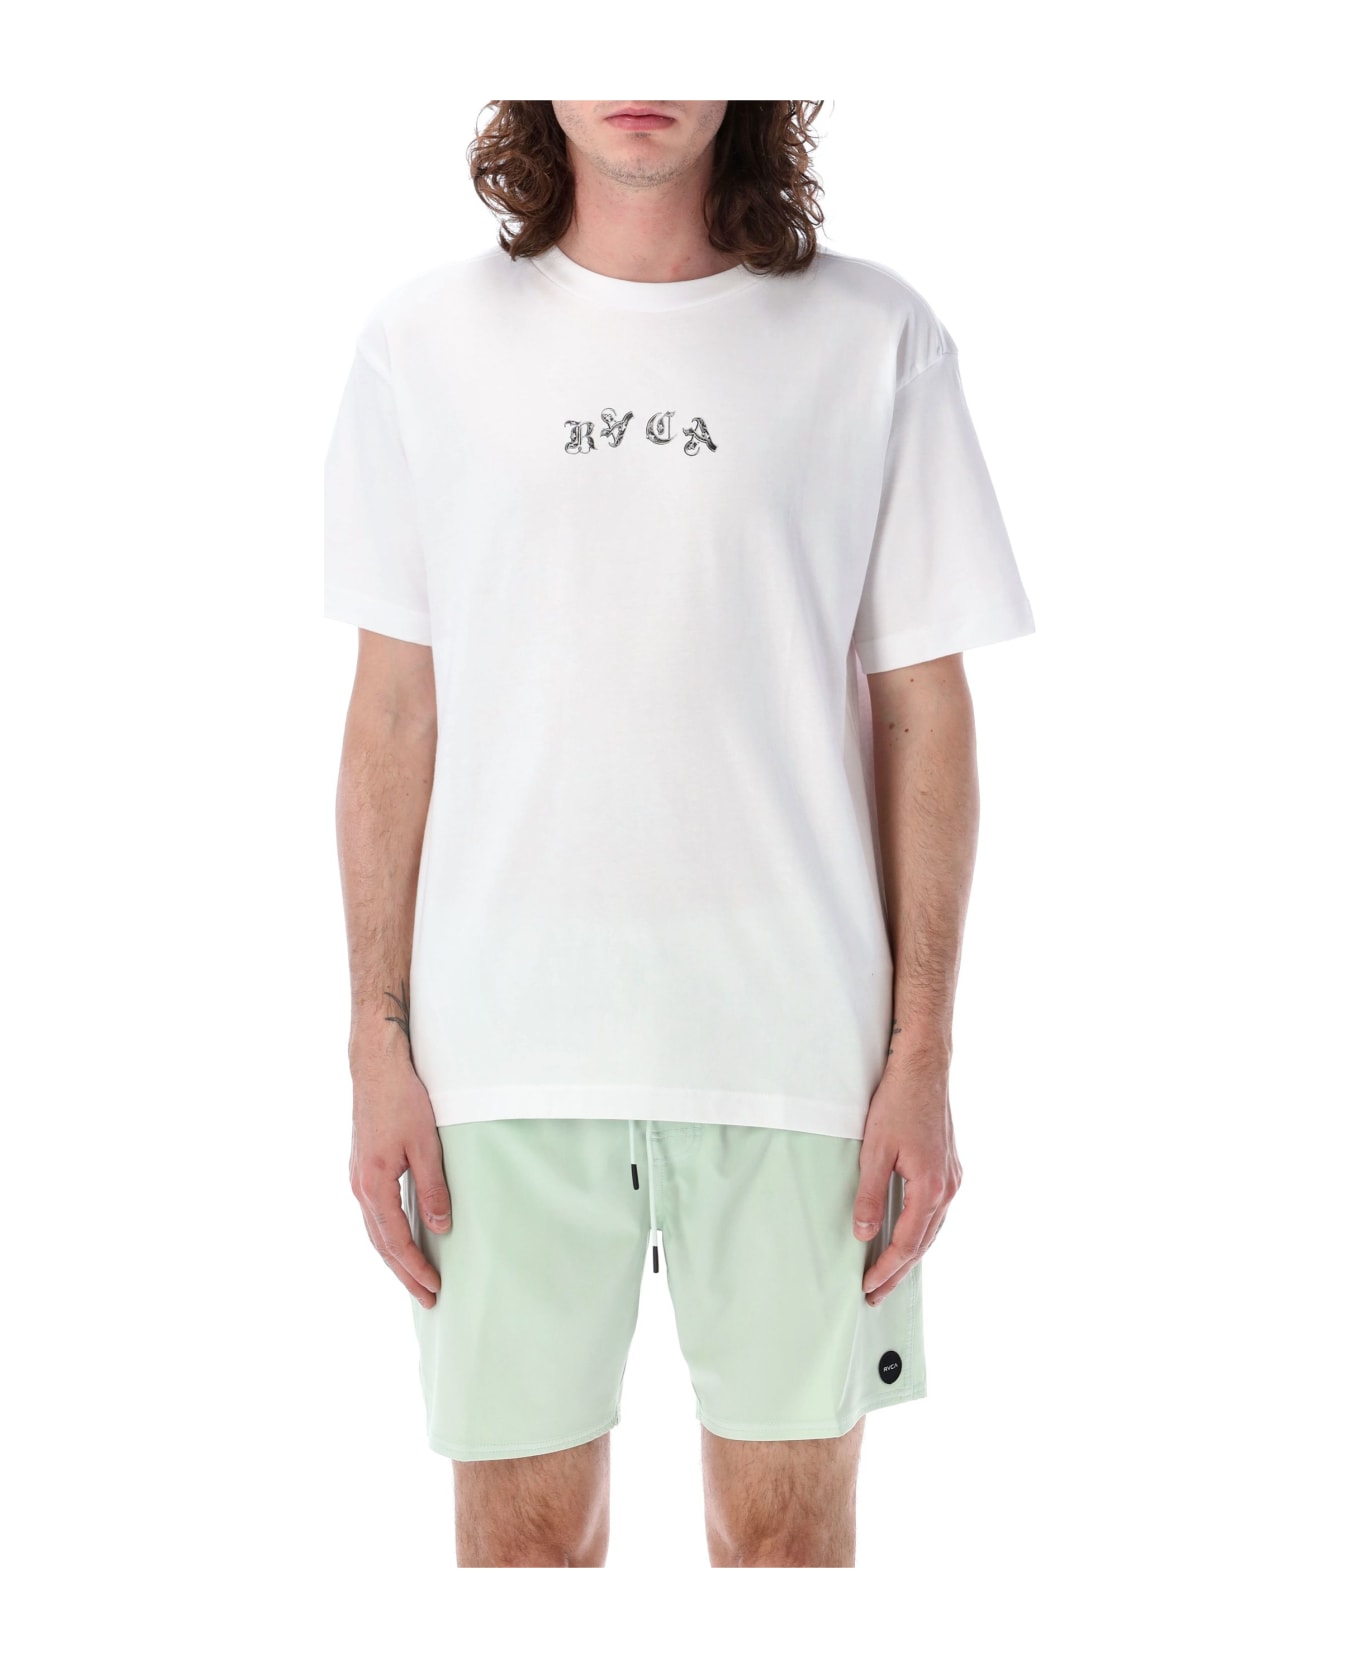 RVCA Dream T-shirt - WHITE